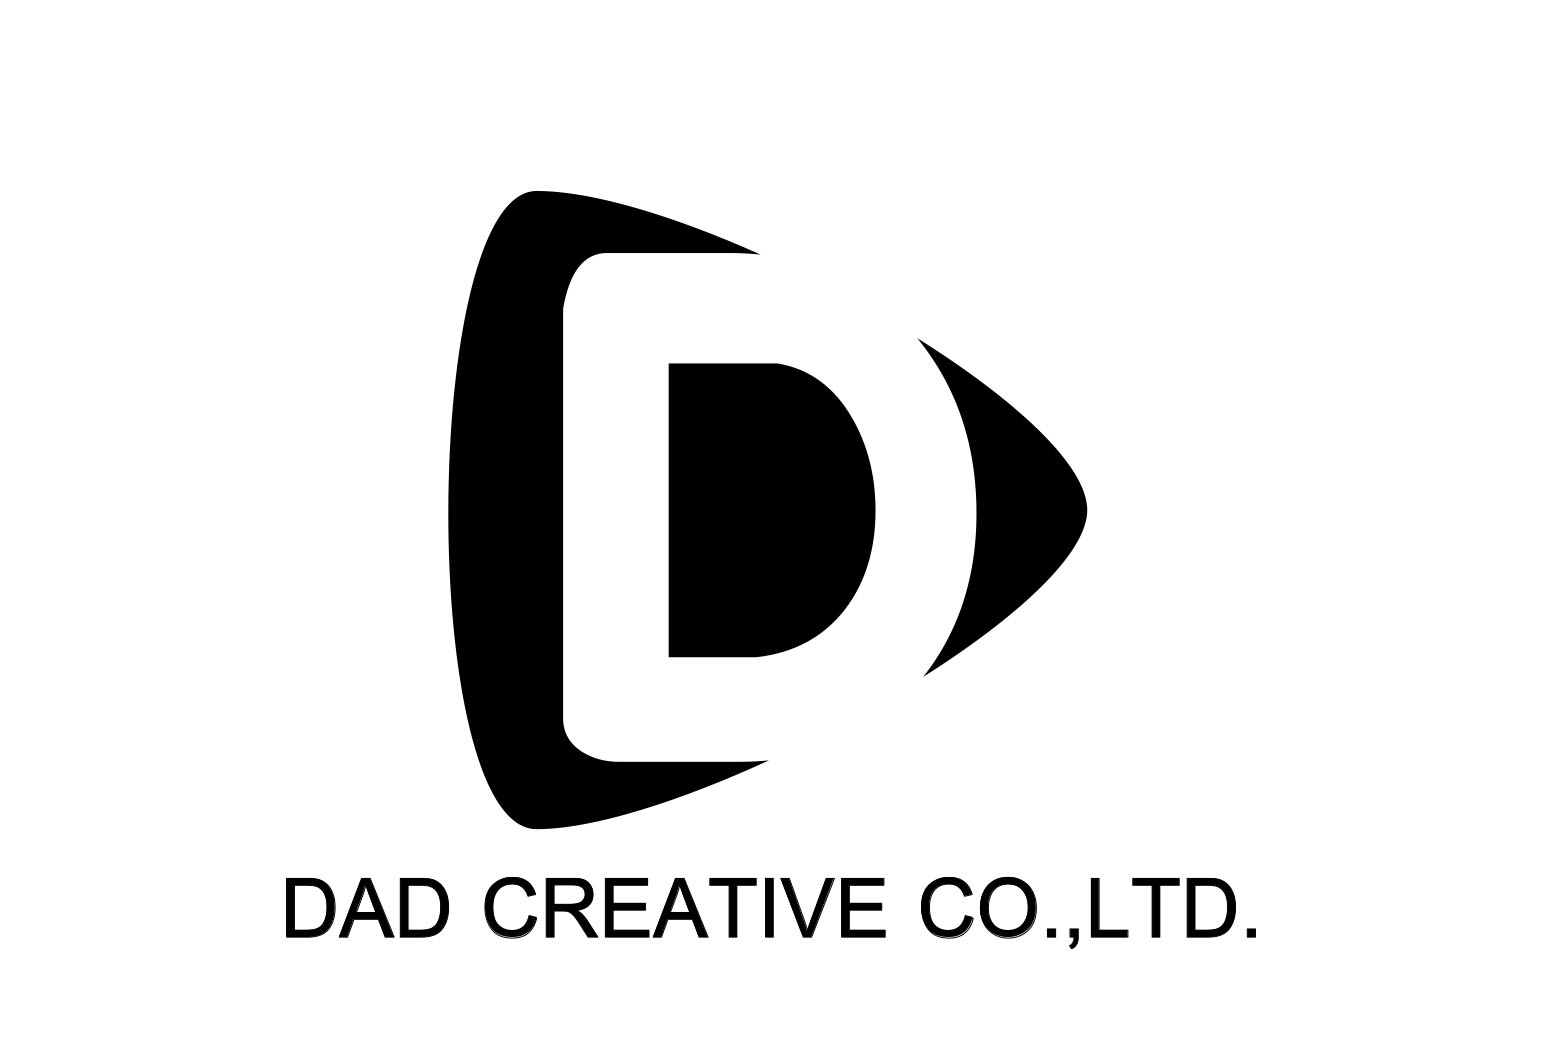 Dad Creative Co., Ltd.